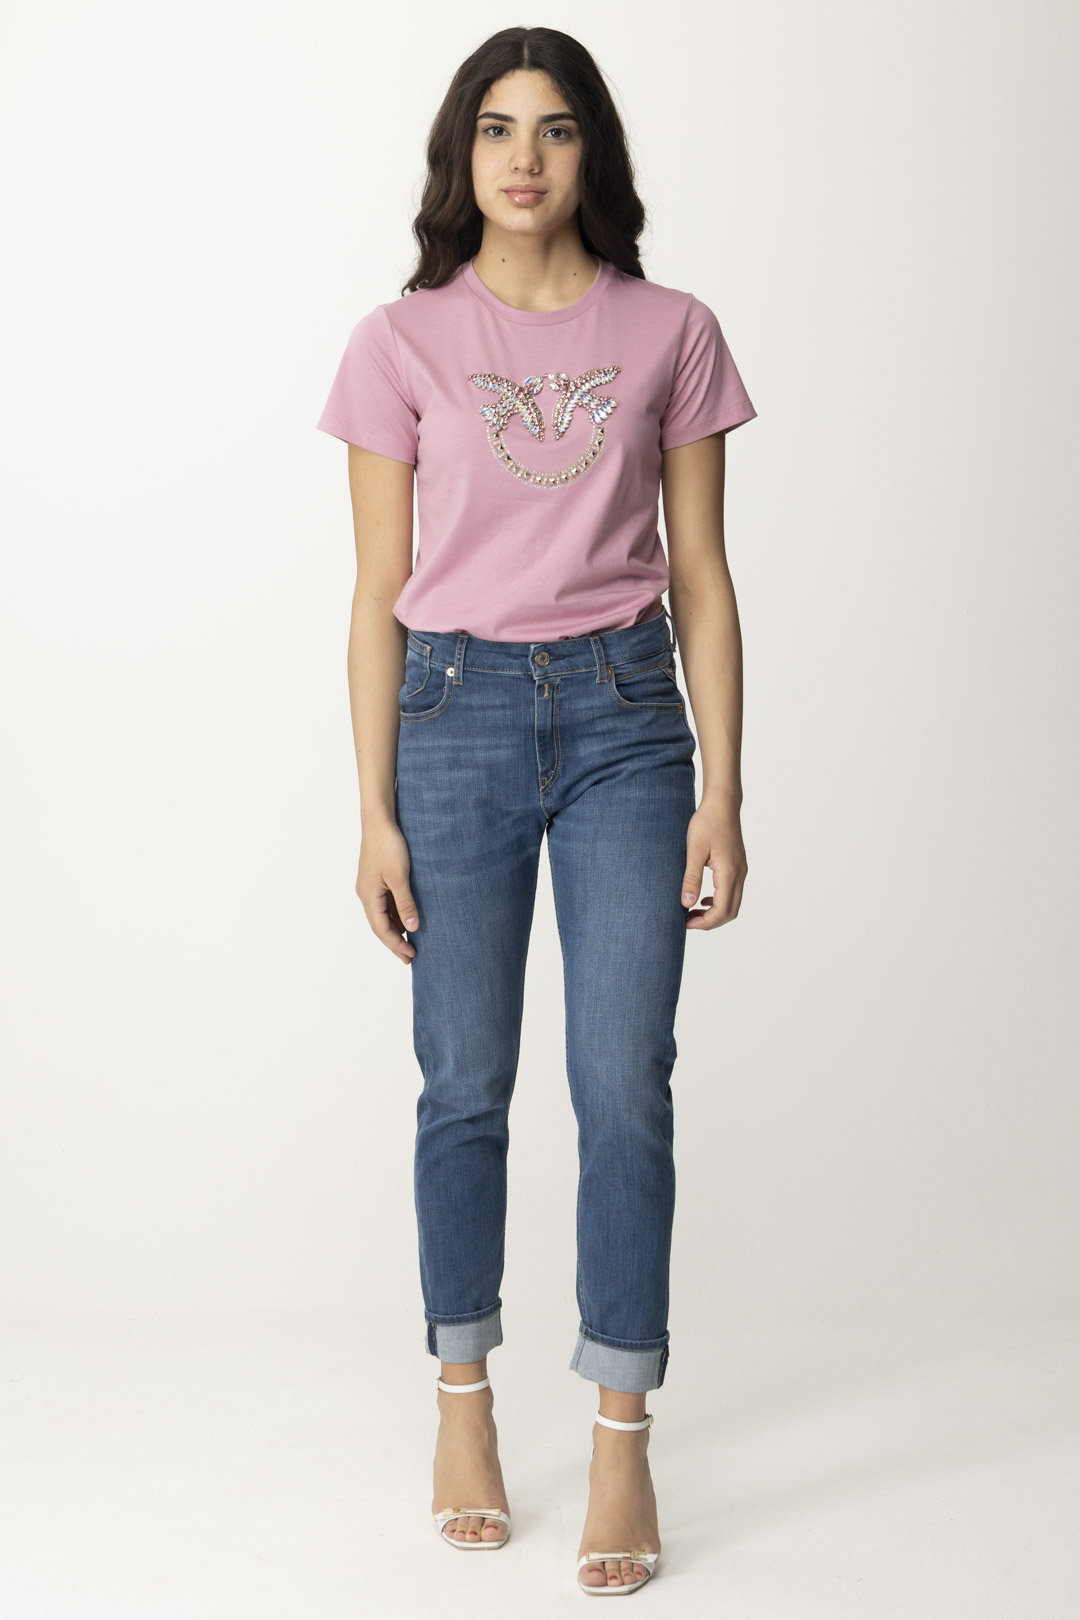 Vista previa: Pinko Camiseta de algodón con maxilogotipo bordado FUMO ORCHIDEA